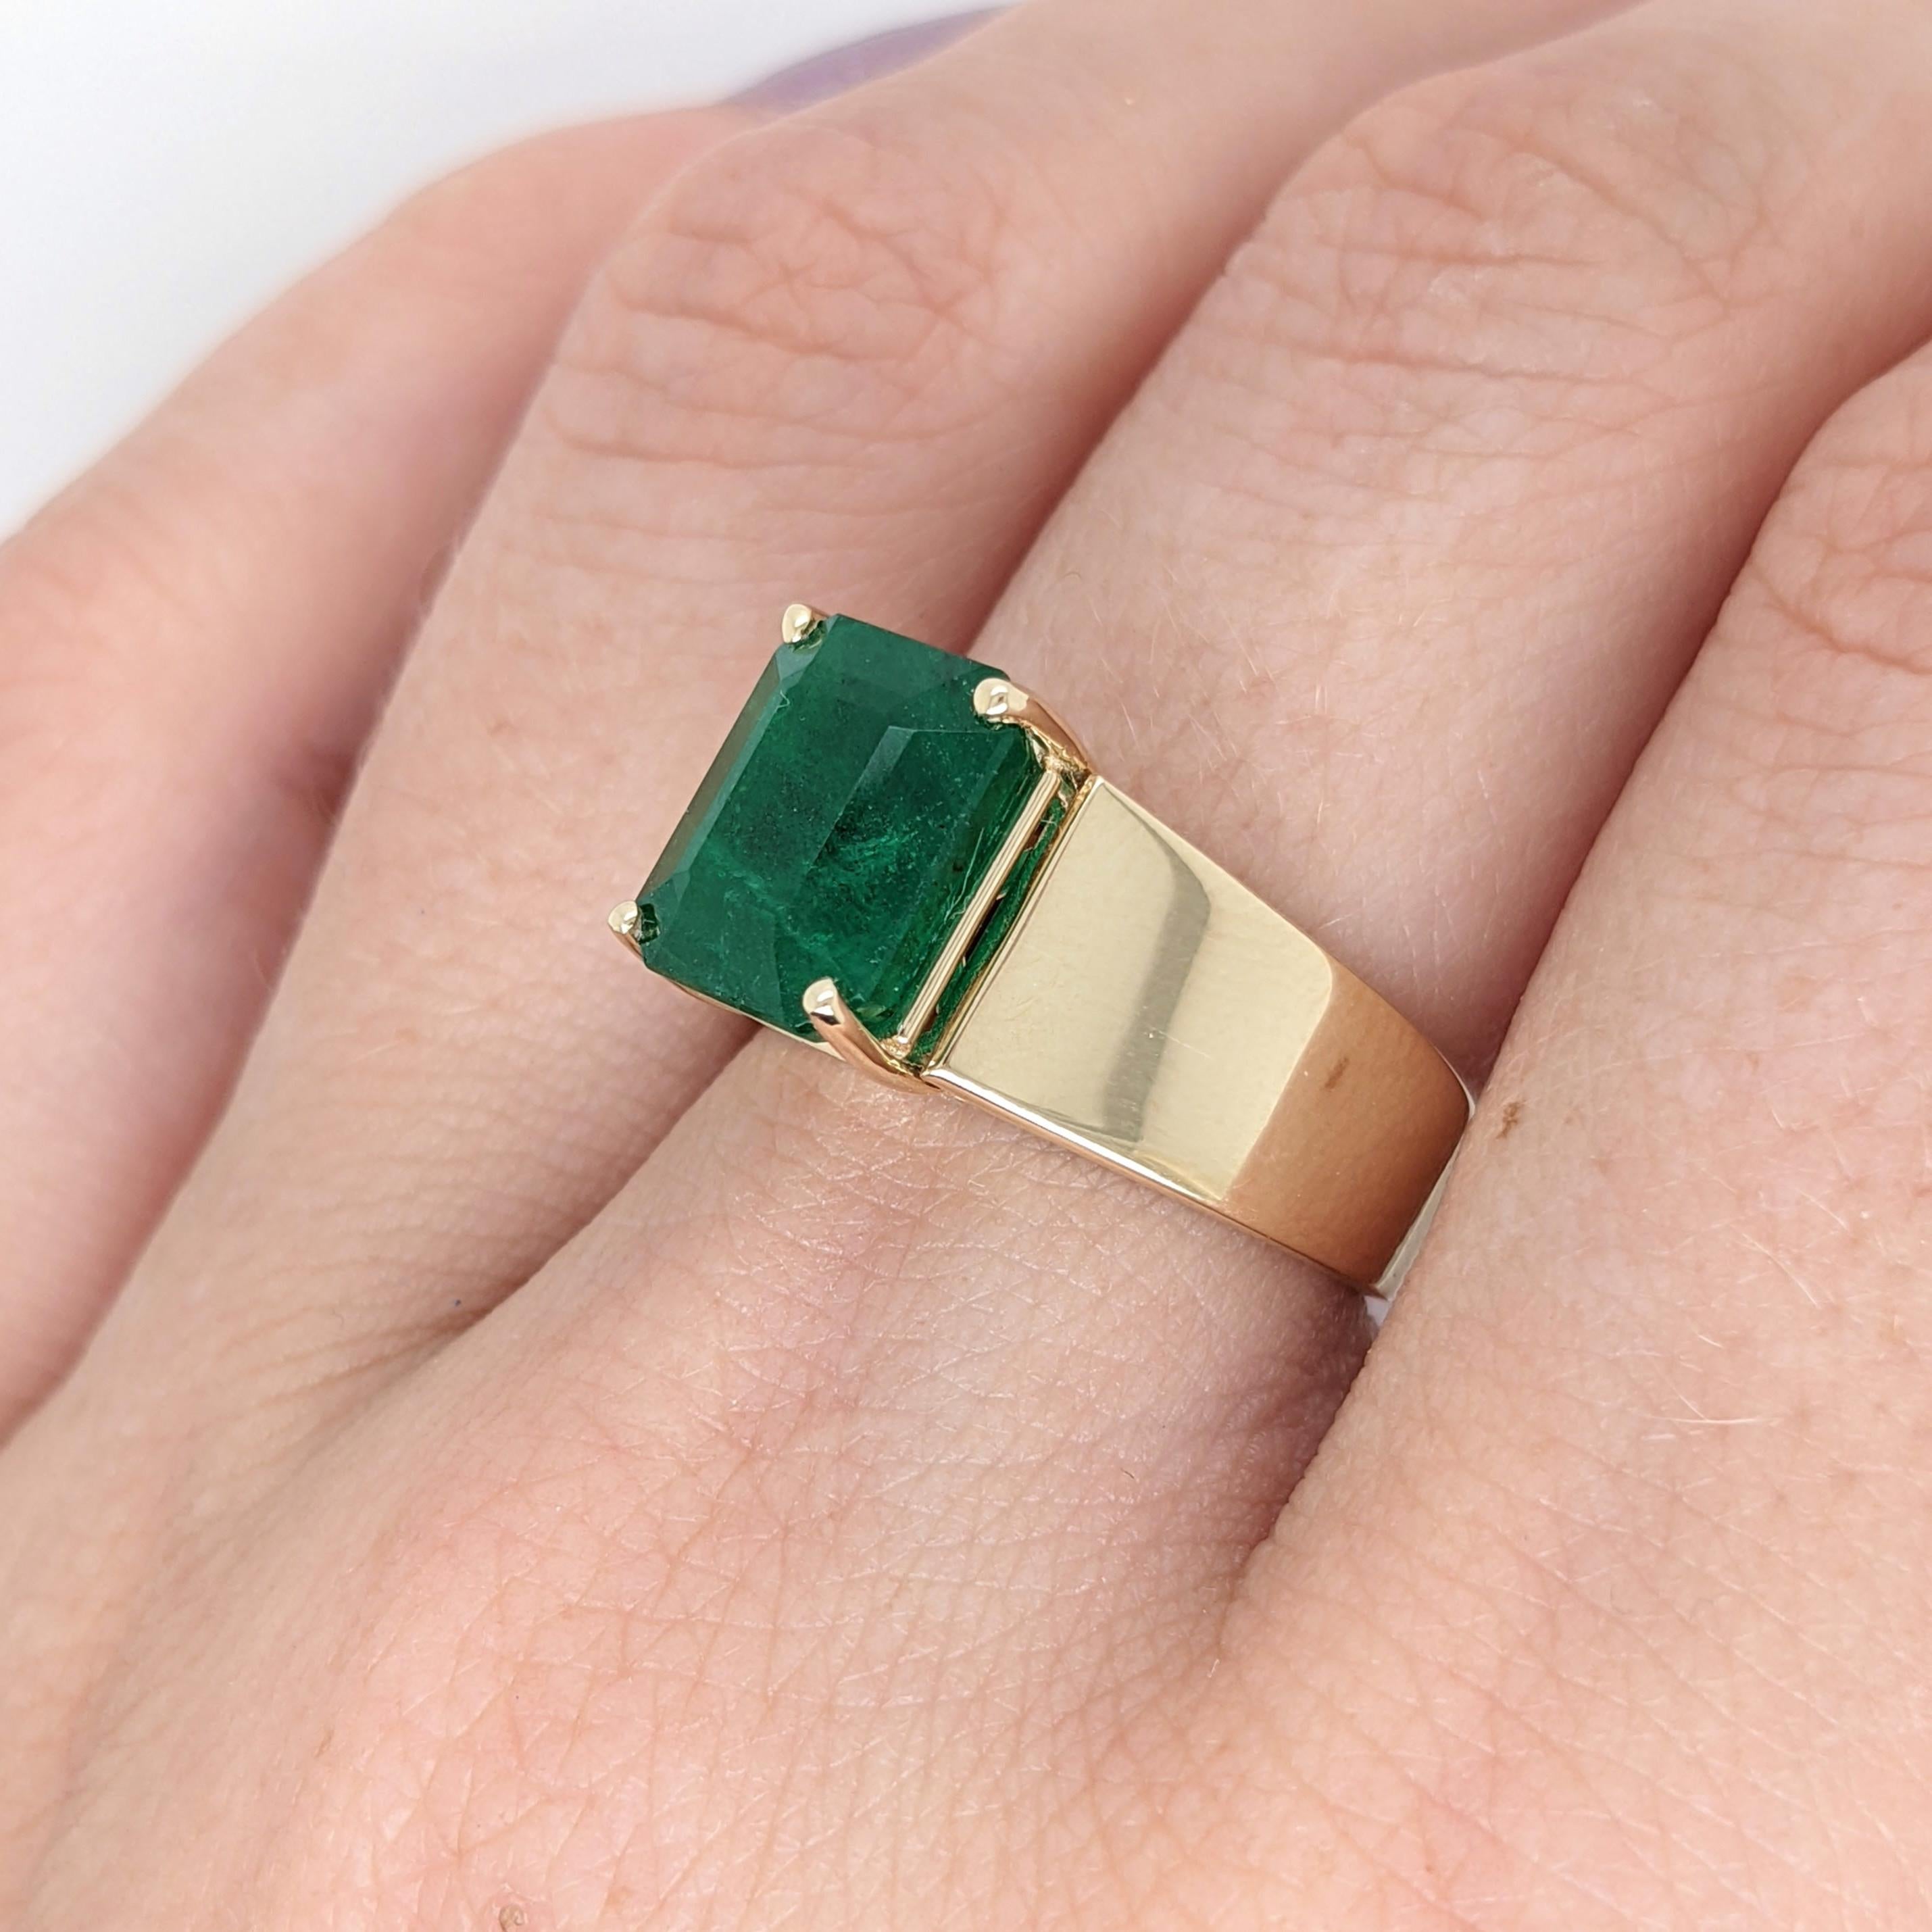 6 carat Zambian Emerald Cigar Band Ring in 14K Yellow Gold  Emerald Cut 10x8mm 1